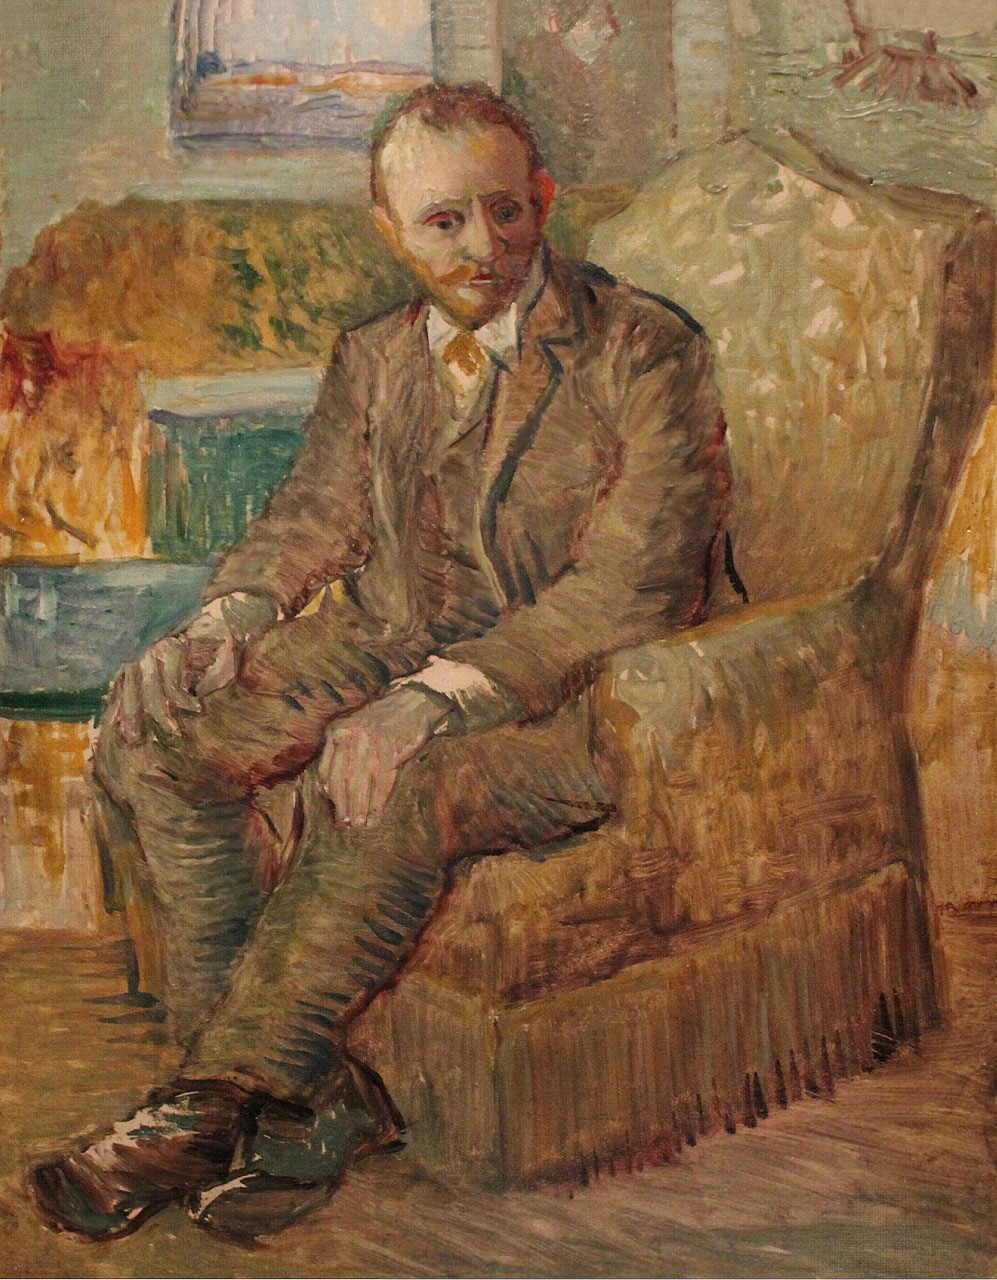 Portrait of art dealer Alexander-Reid sitting in an easy chair